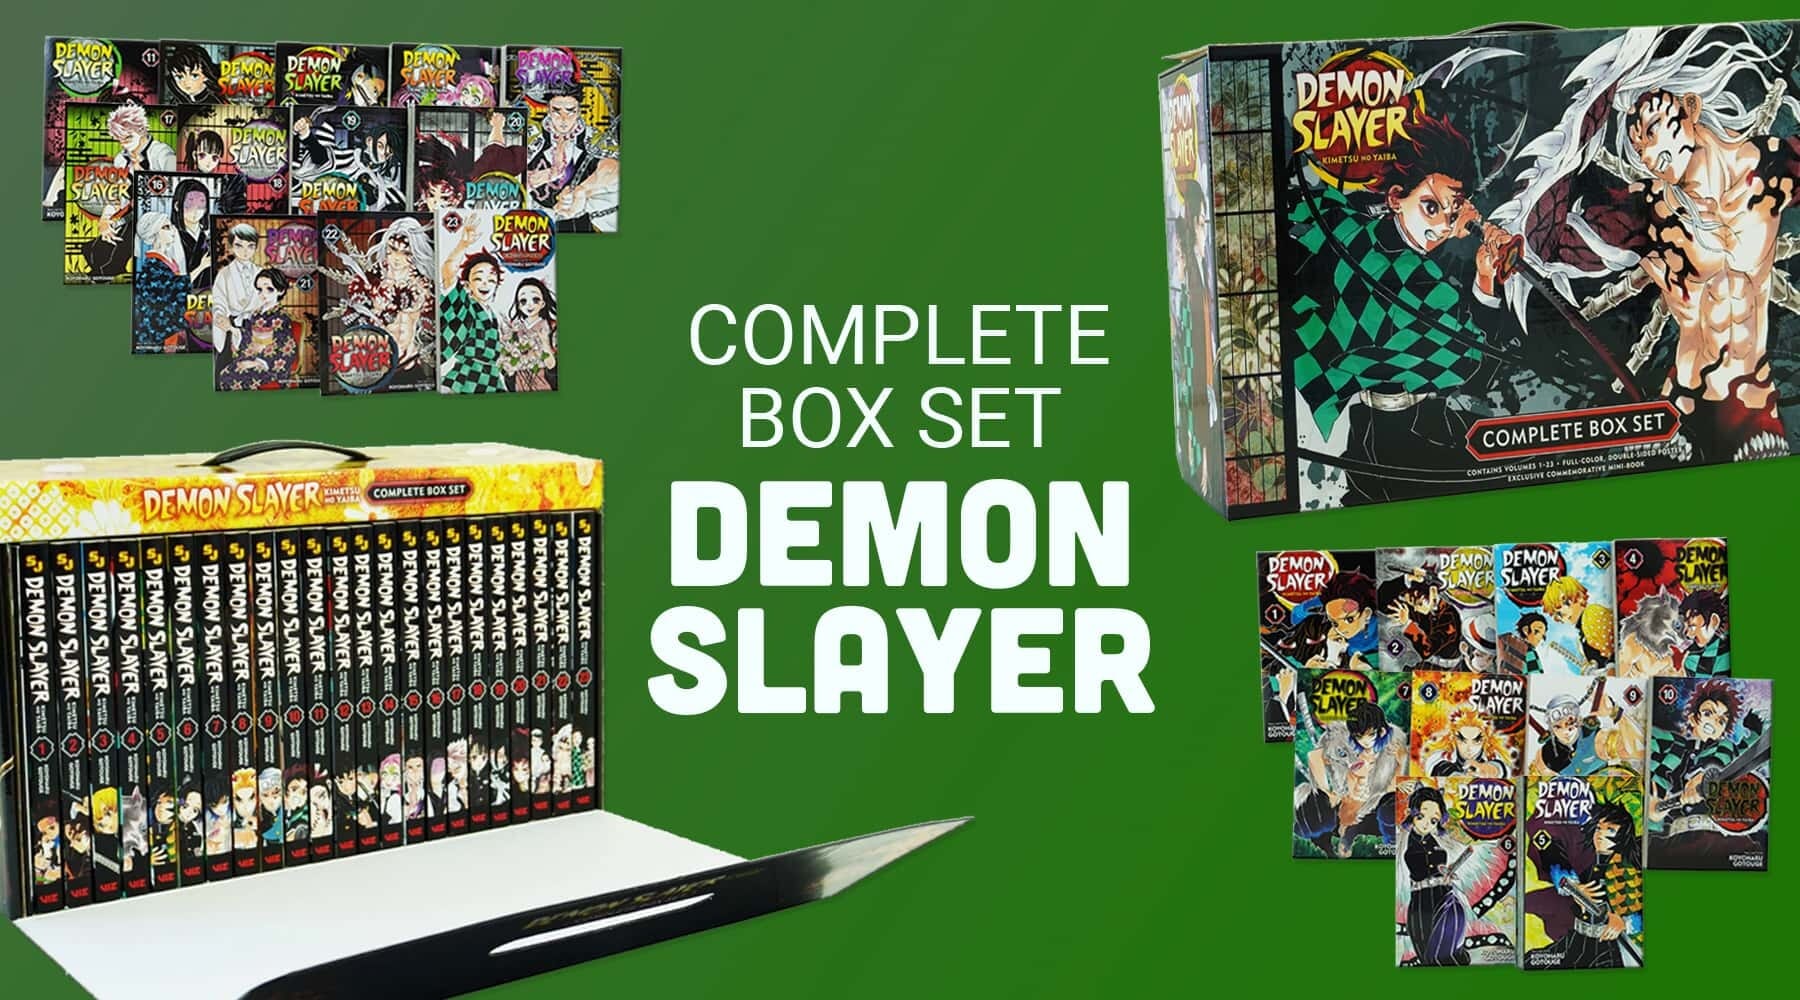  Demon Slayer Complete Box Set: Includes volumes 1-23